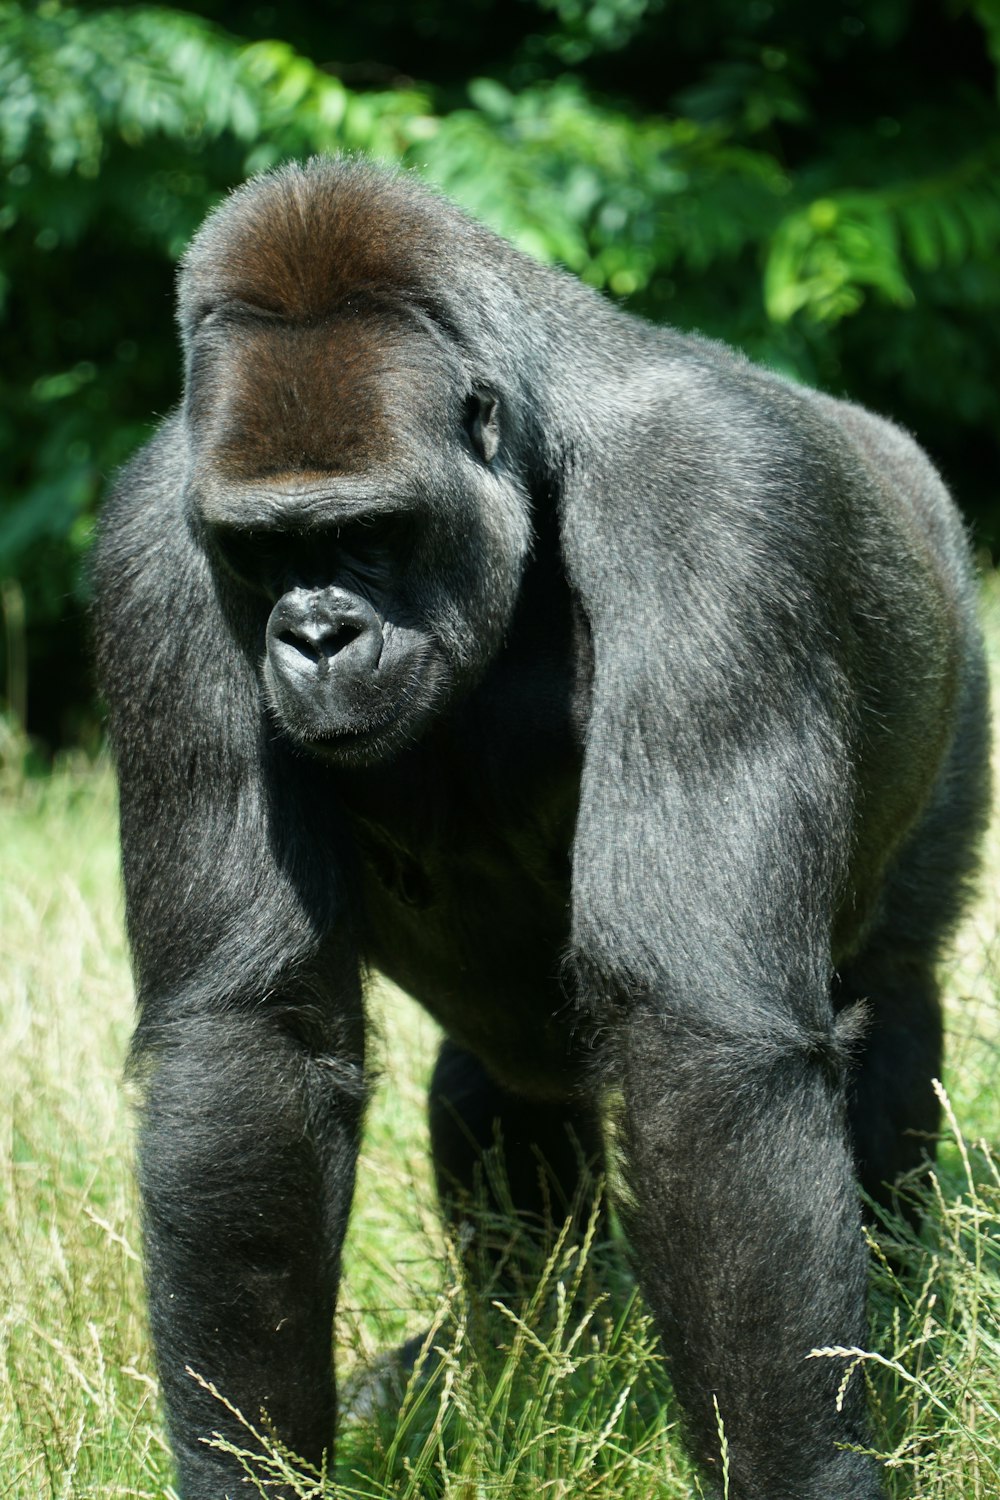 black gorilla on green grass during daytime